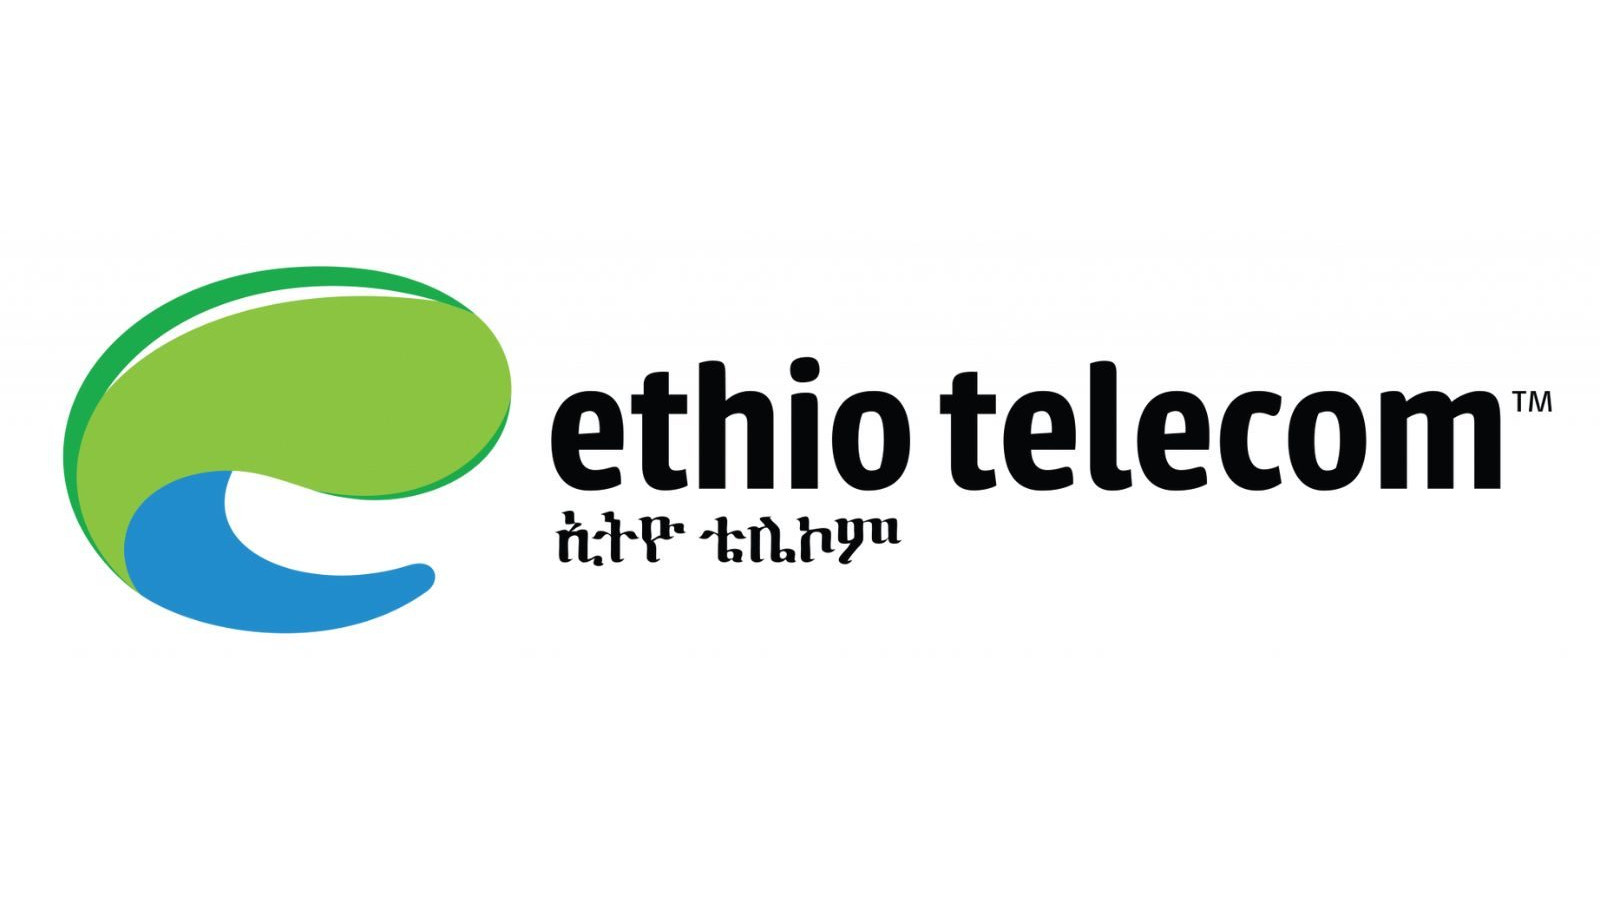 Ethiotelecom 2500 ETB Mobile Top-up ET 46.86 $